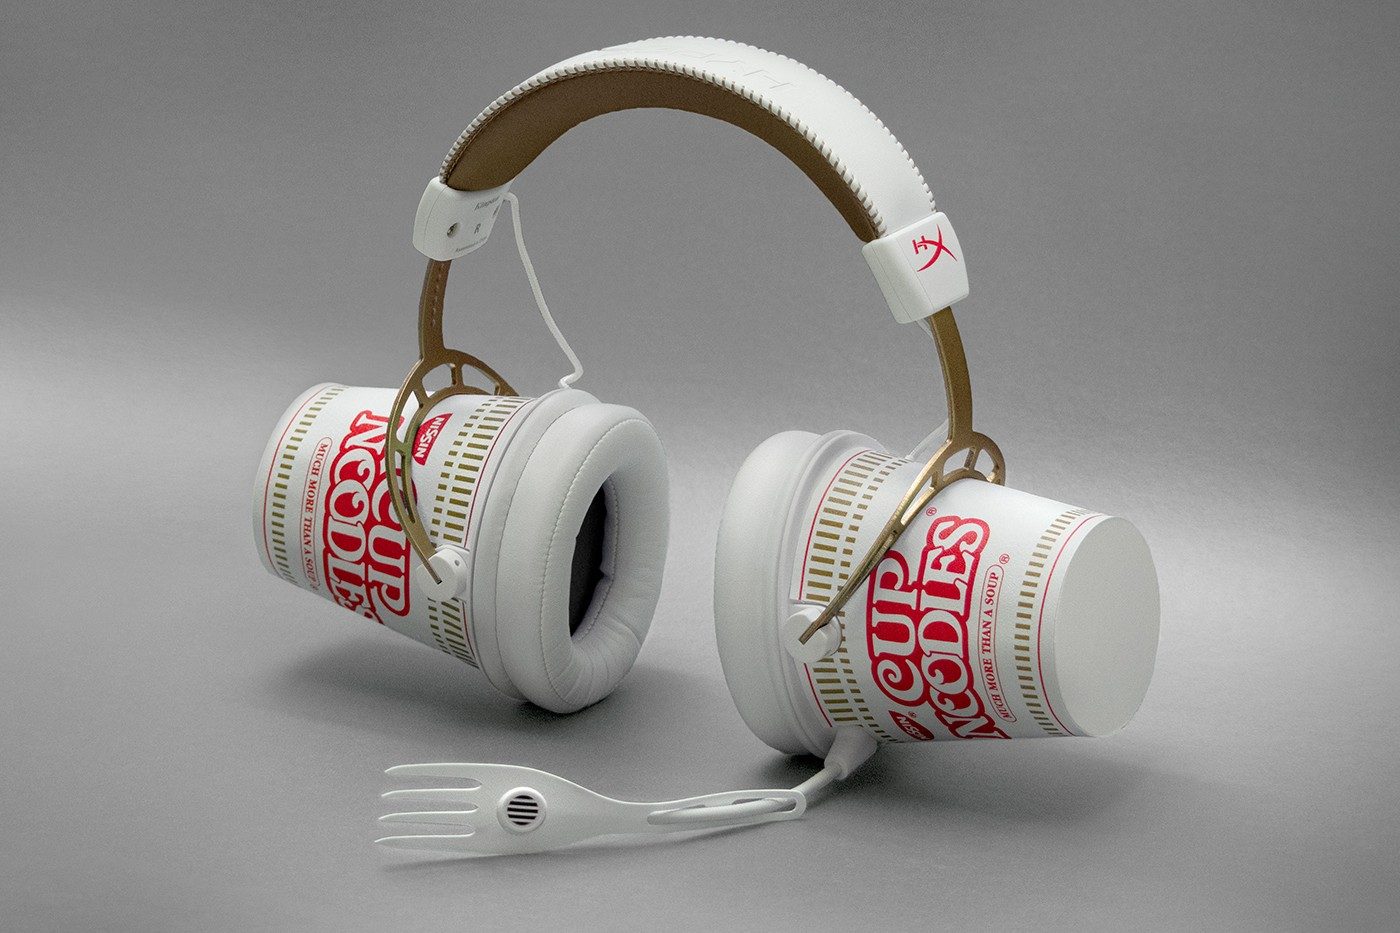 https___hypebeast.com_image_2019_03_nissin-x-hyperx-cup-noodle-headphones-001